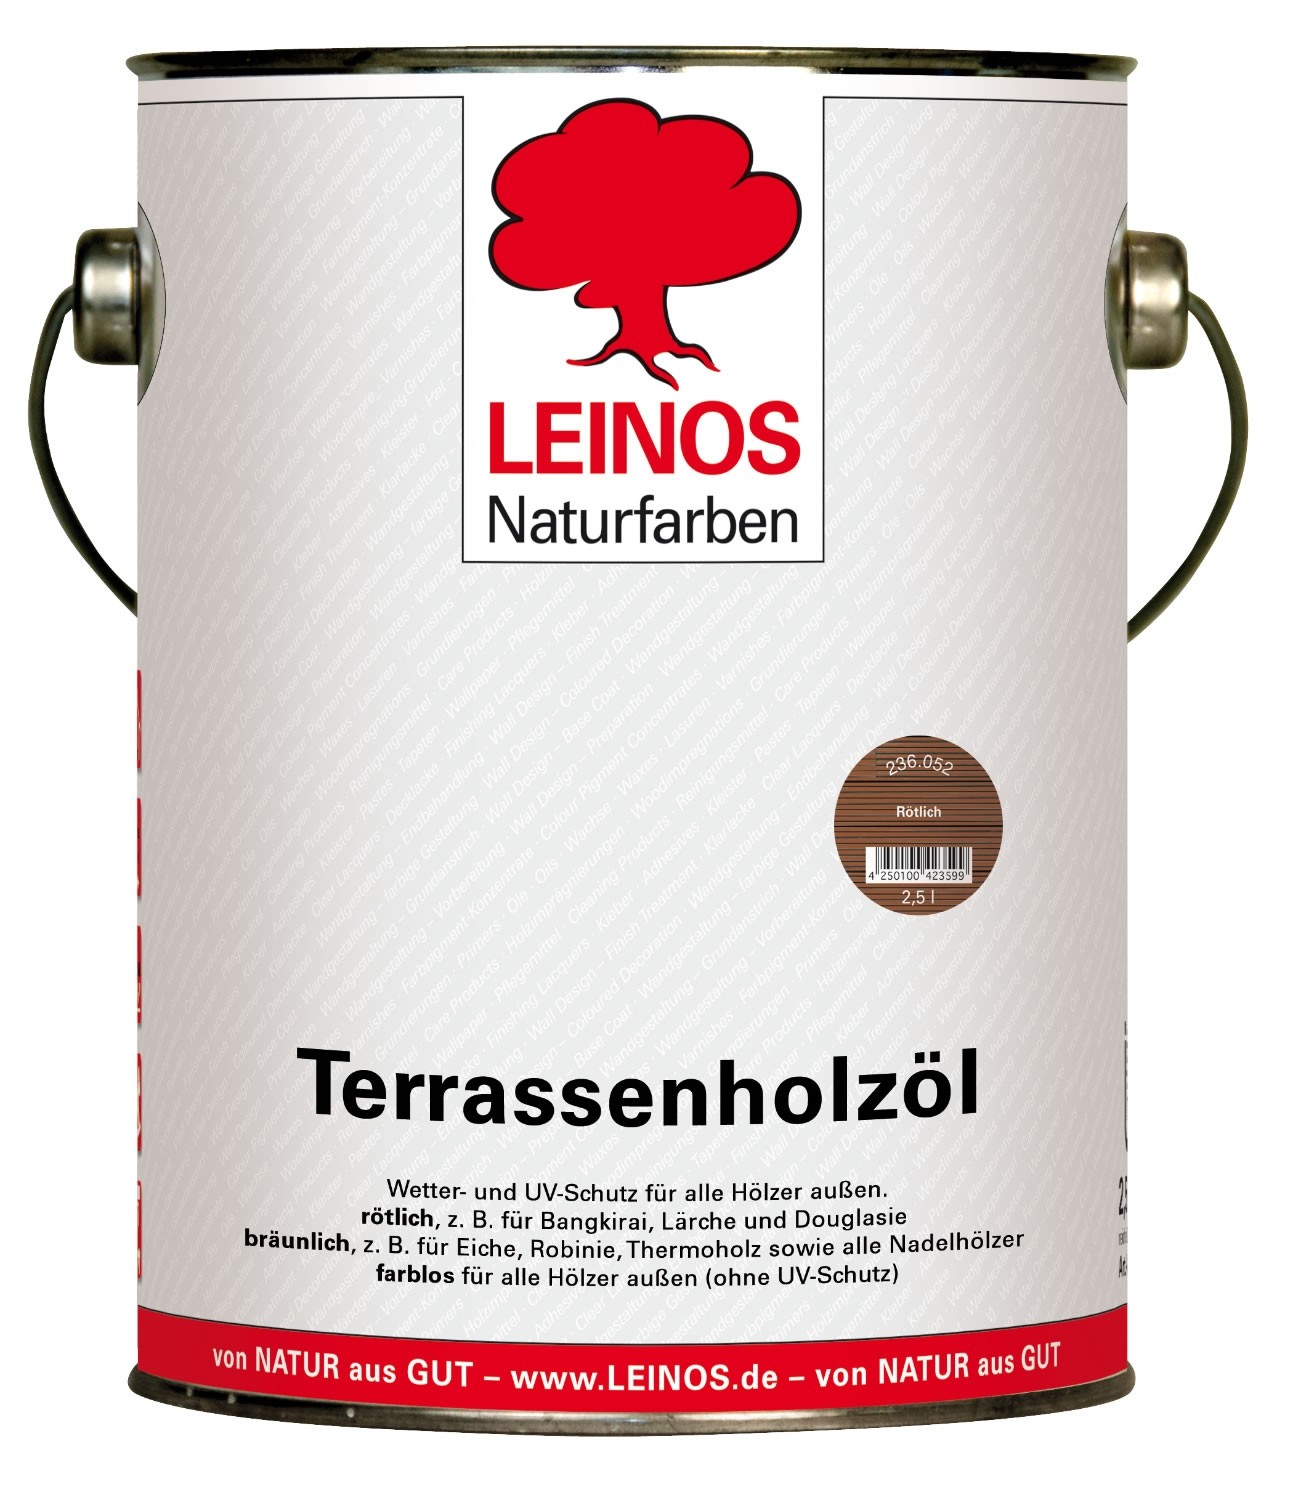 Leinos Terrassenholzöl Rötlich 236 - 2,5 L 